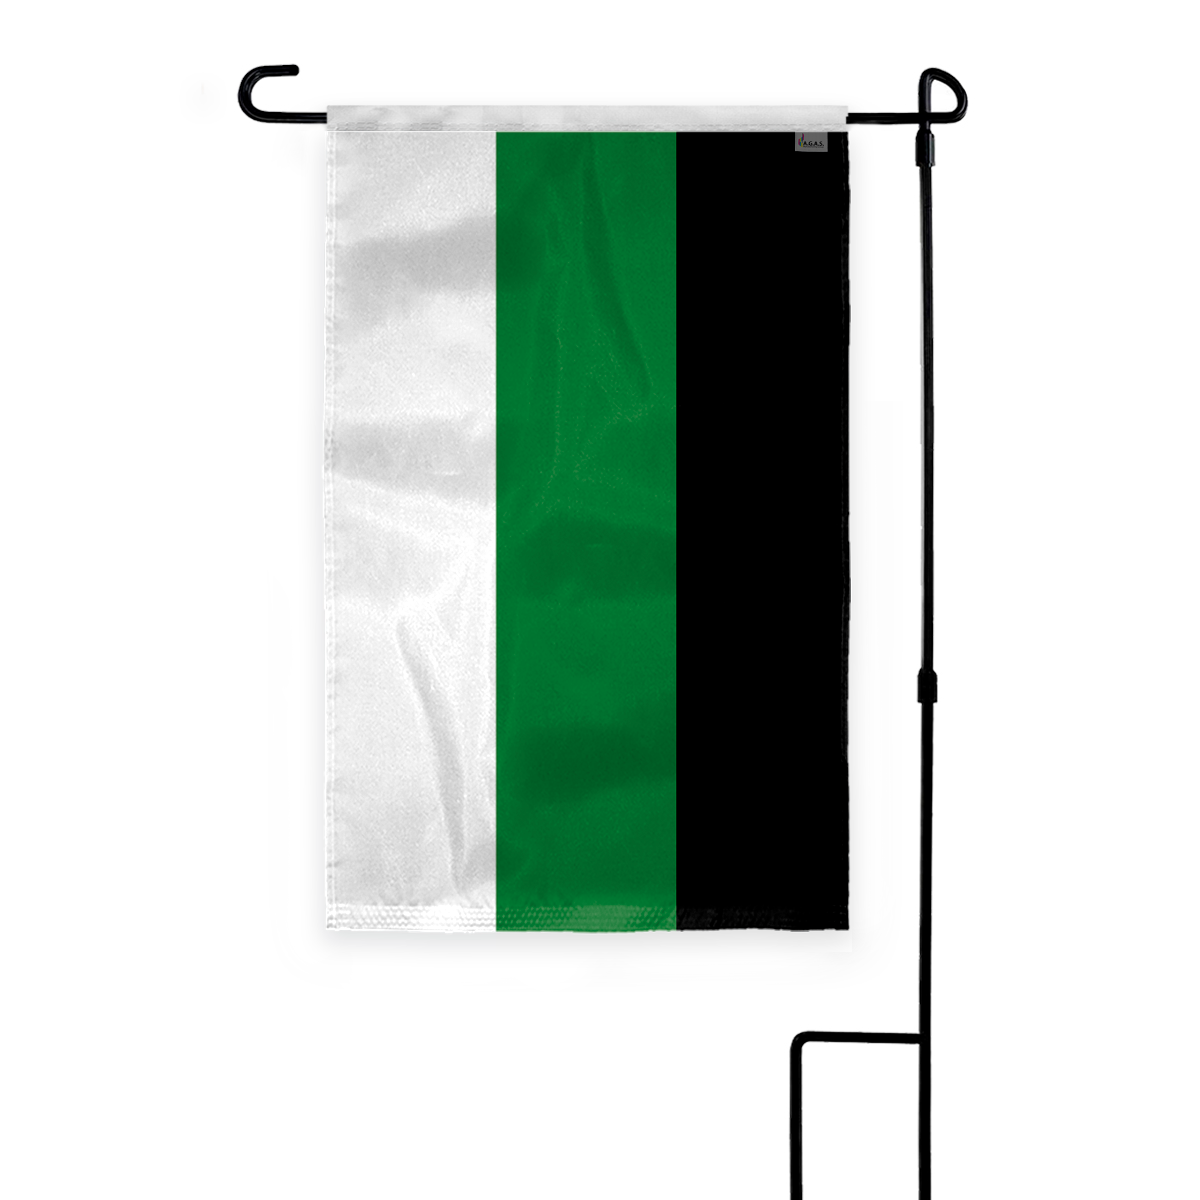 AGAS Neutrois Applique & Embroidered Garden Flag 12"x18" inch